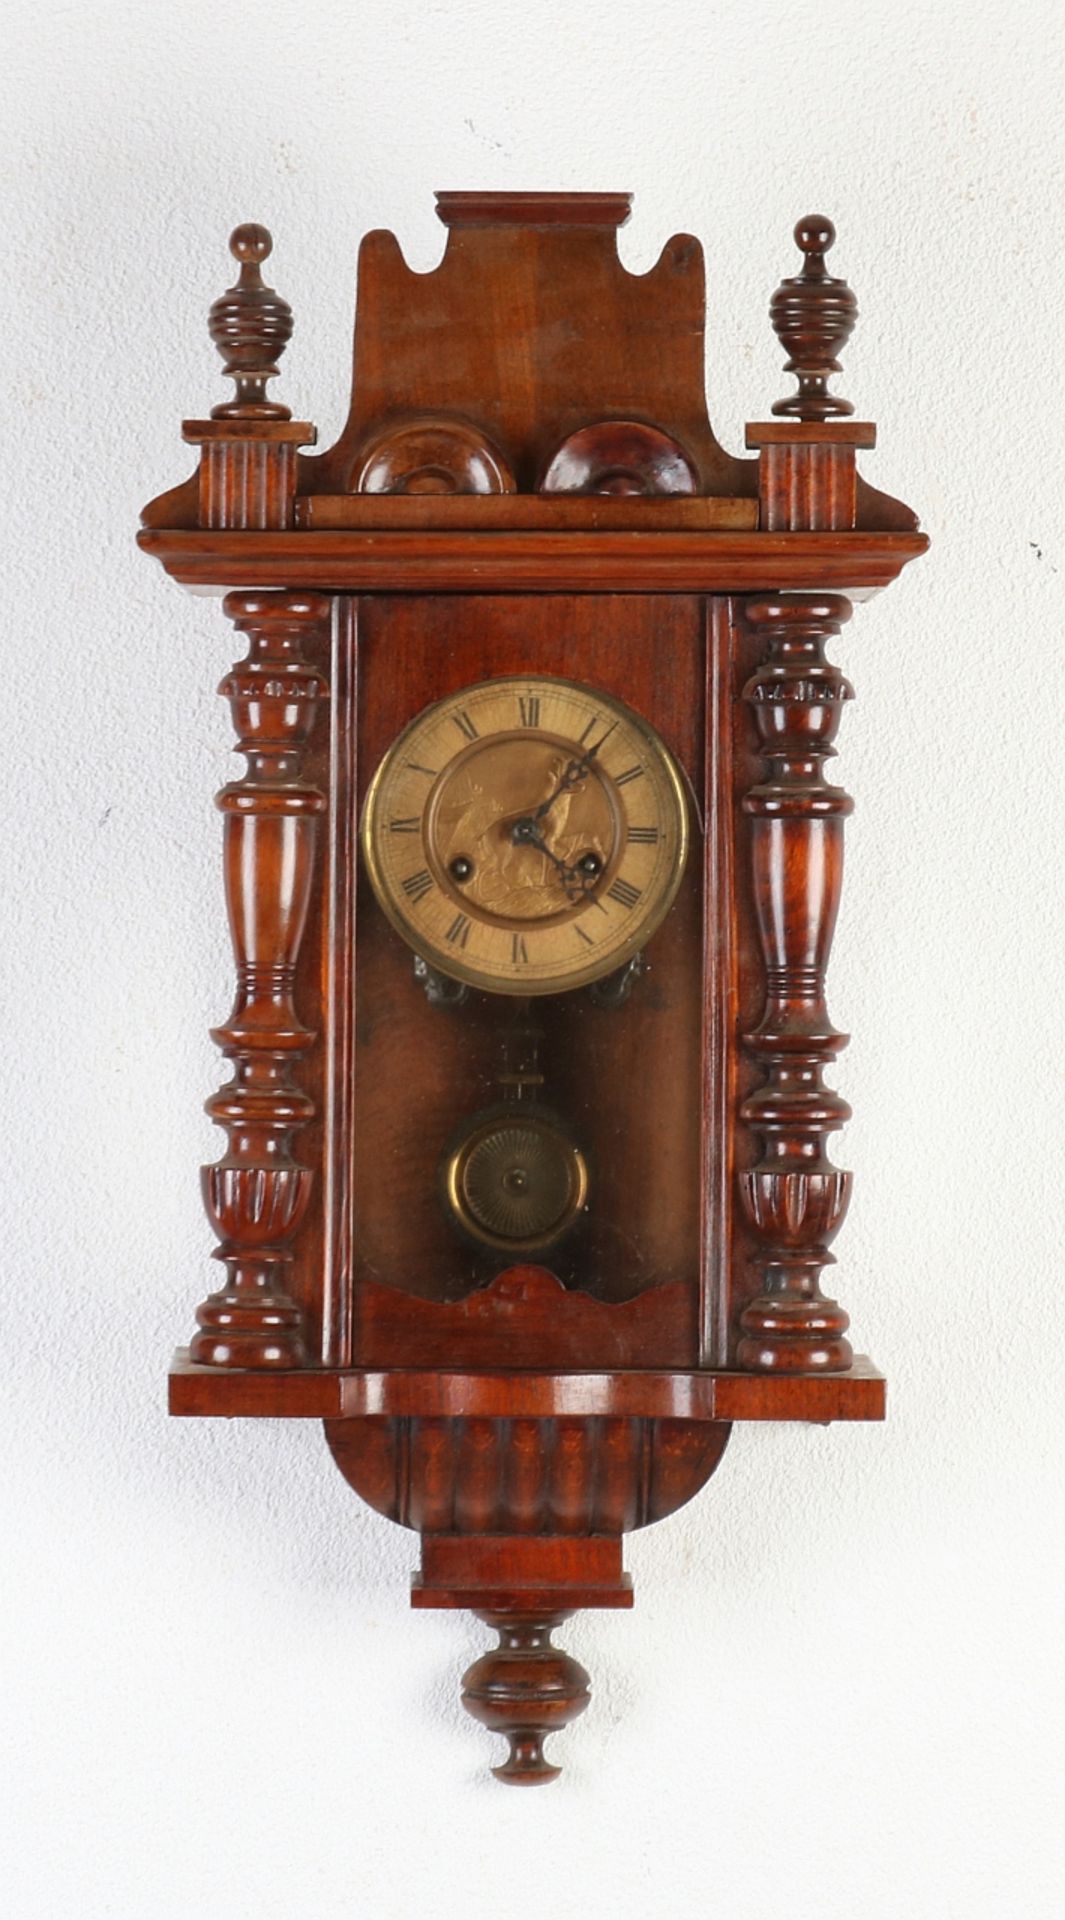 Two regulator clocks, 1900